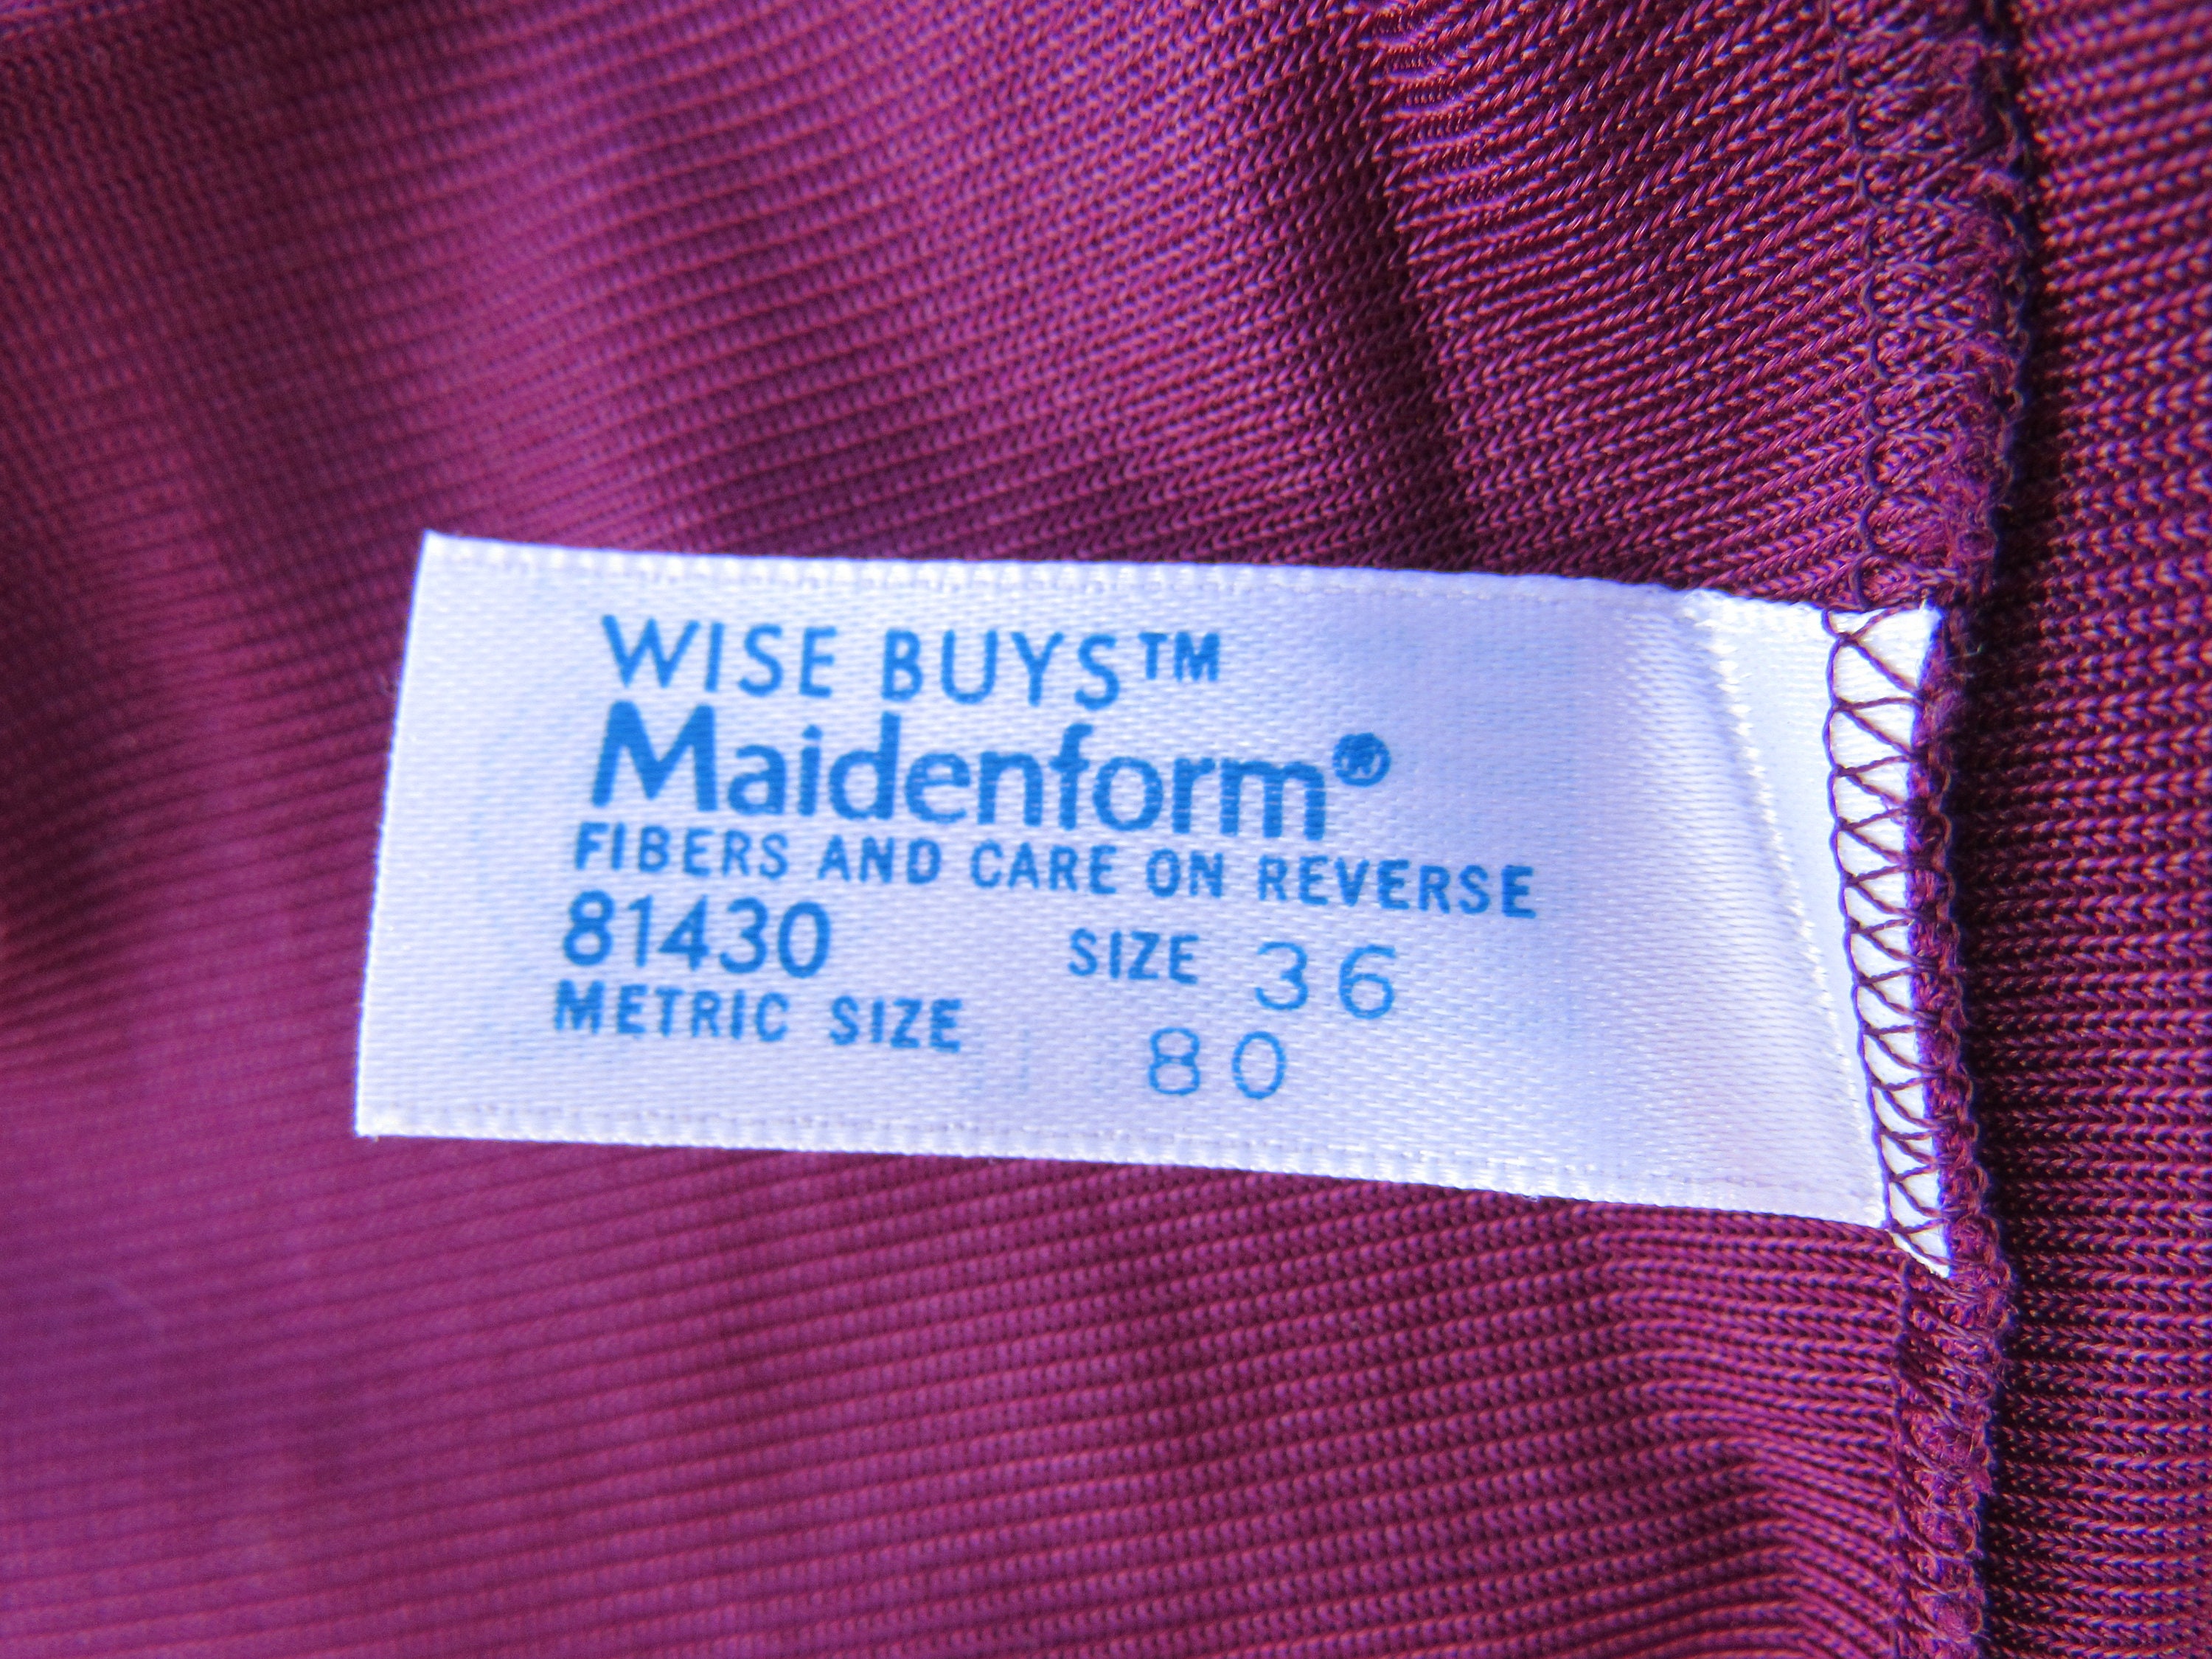 Vintage 70s 80s Maidenform Wise Buys Lacy Camisole Chemise Slip 36 Deep  Fuchsia Silky Feminine Retro USA Read Description Glam Garb 